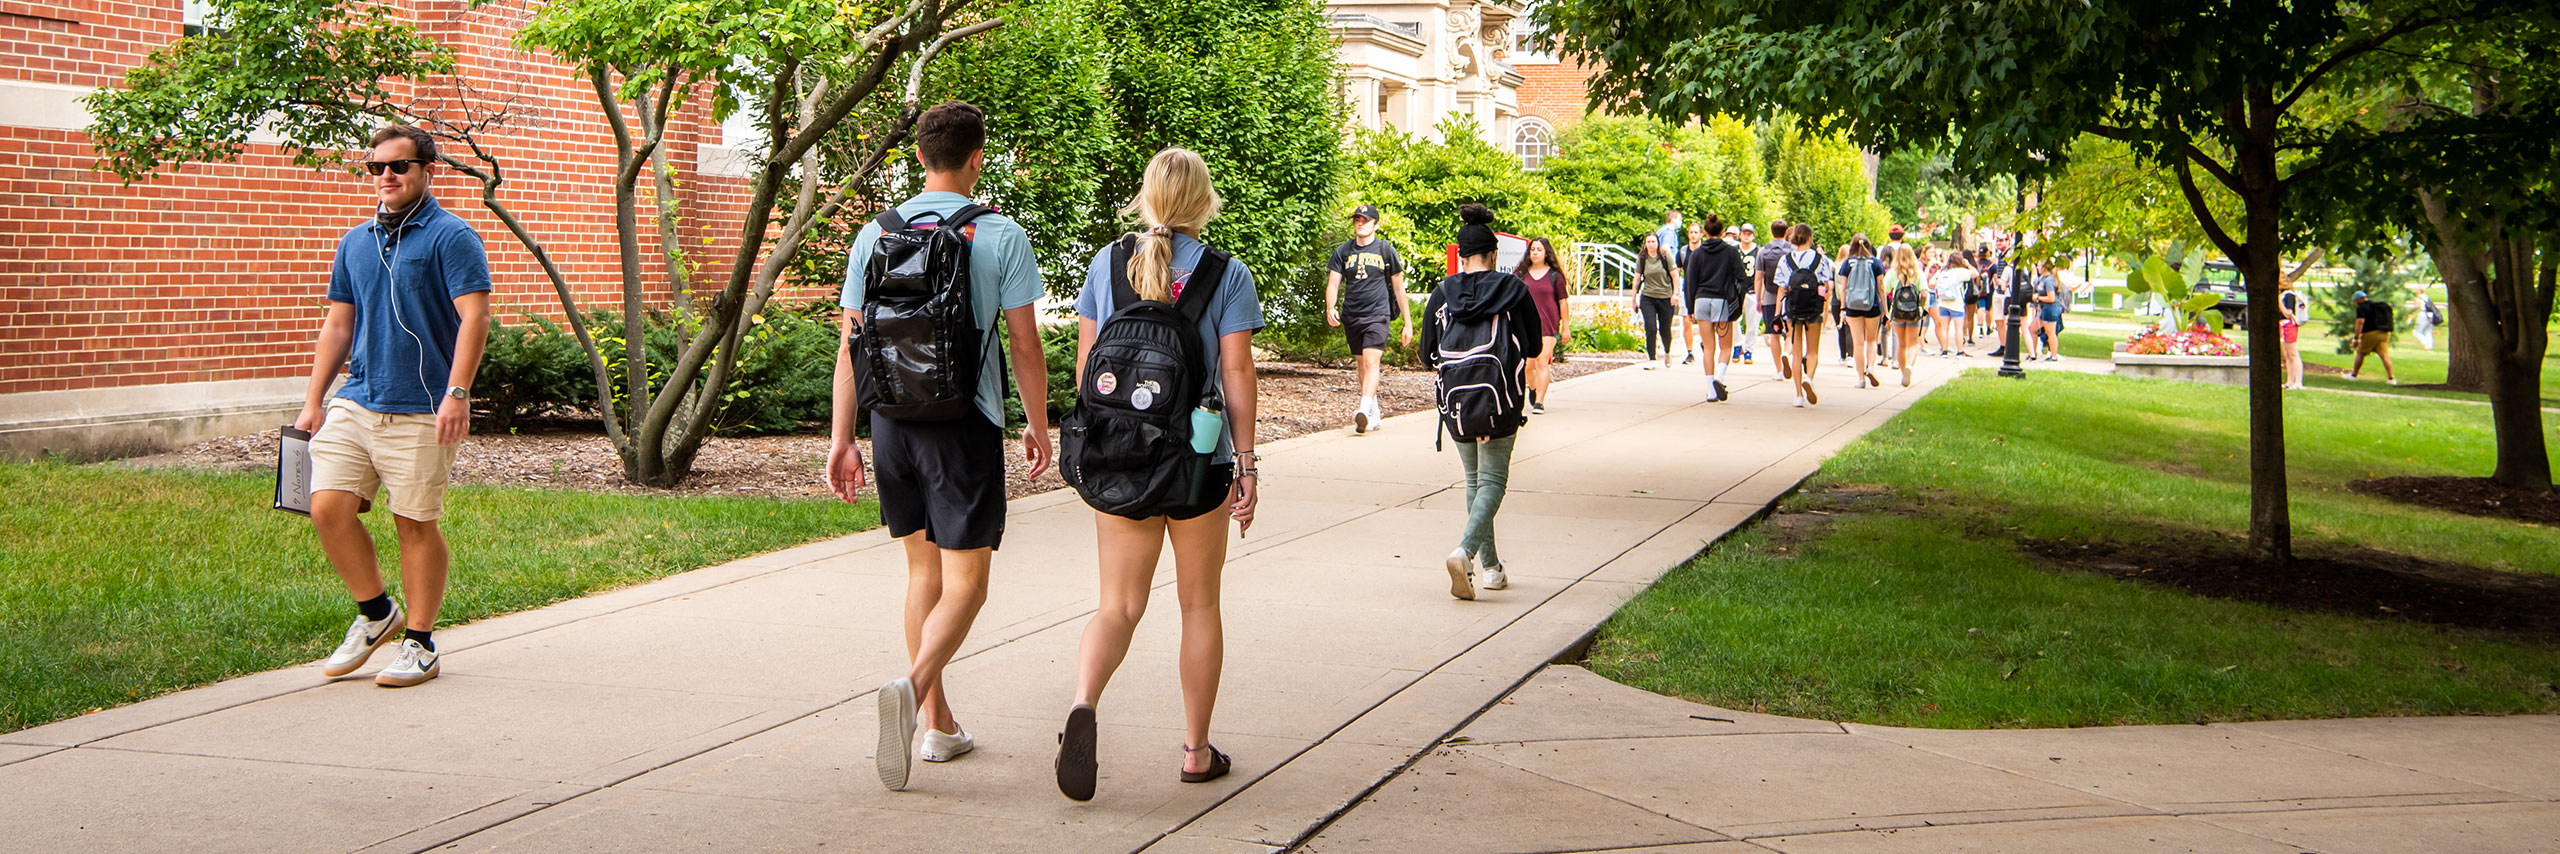 Students walking on Illinois State quad